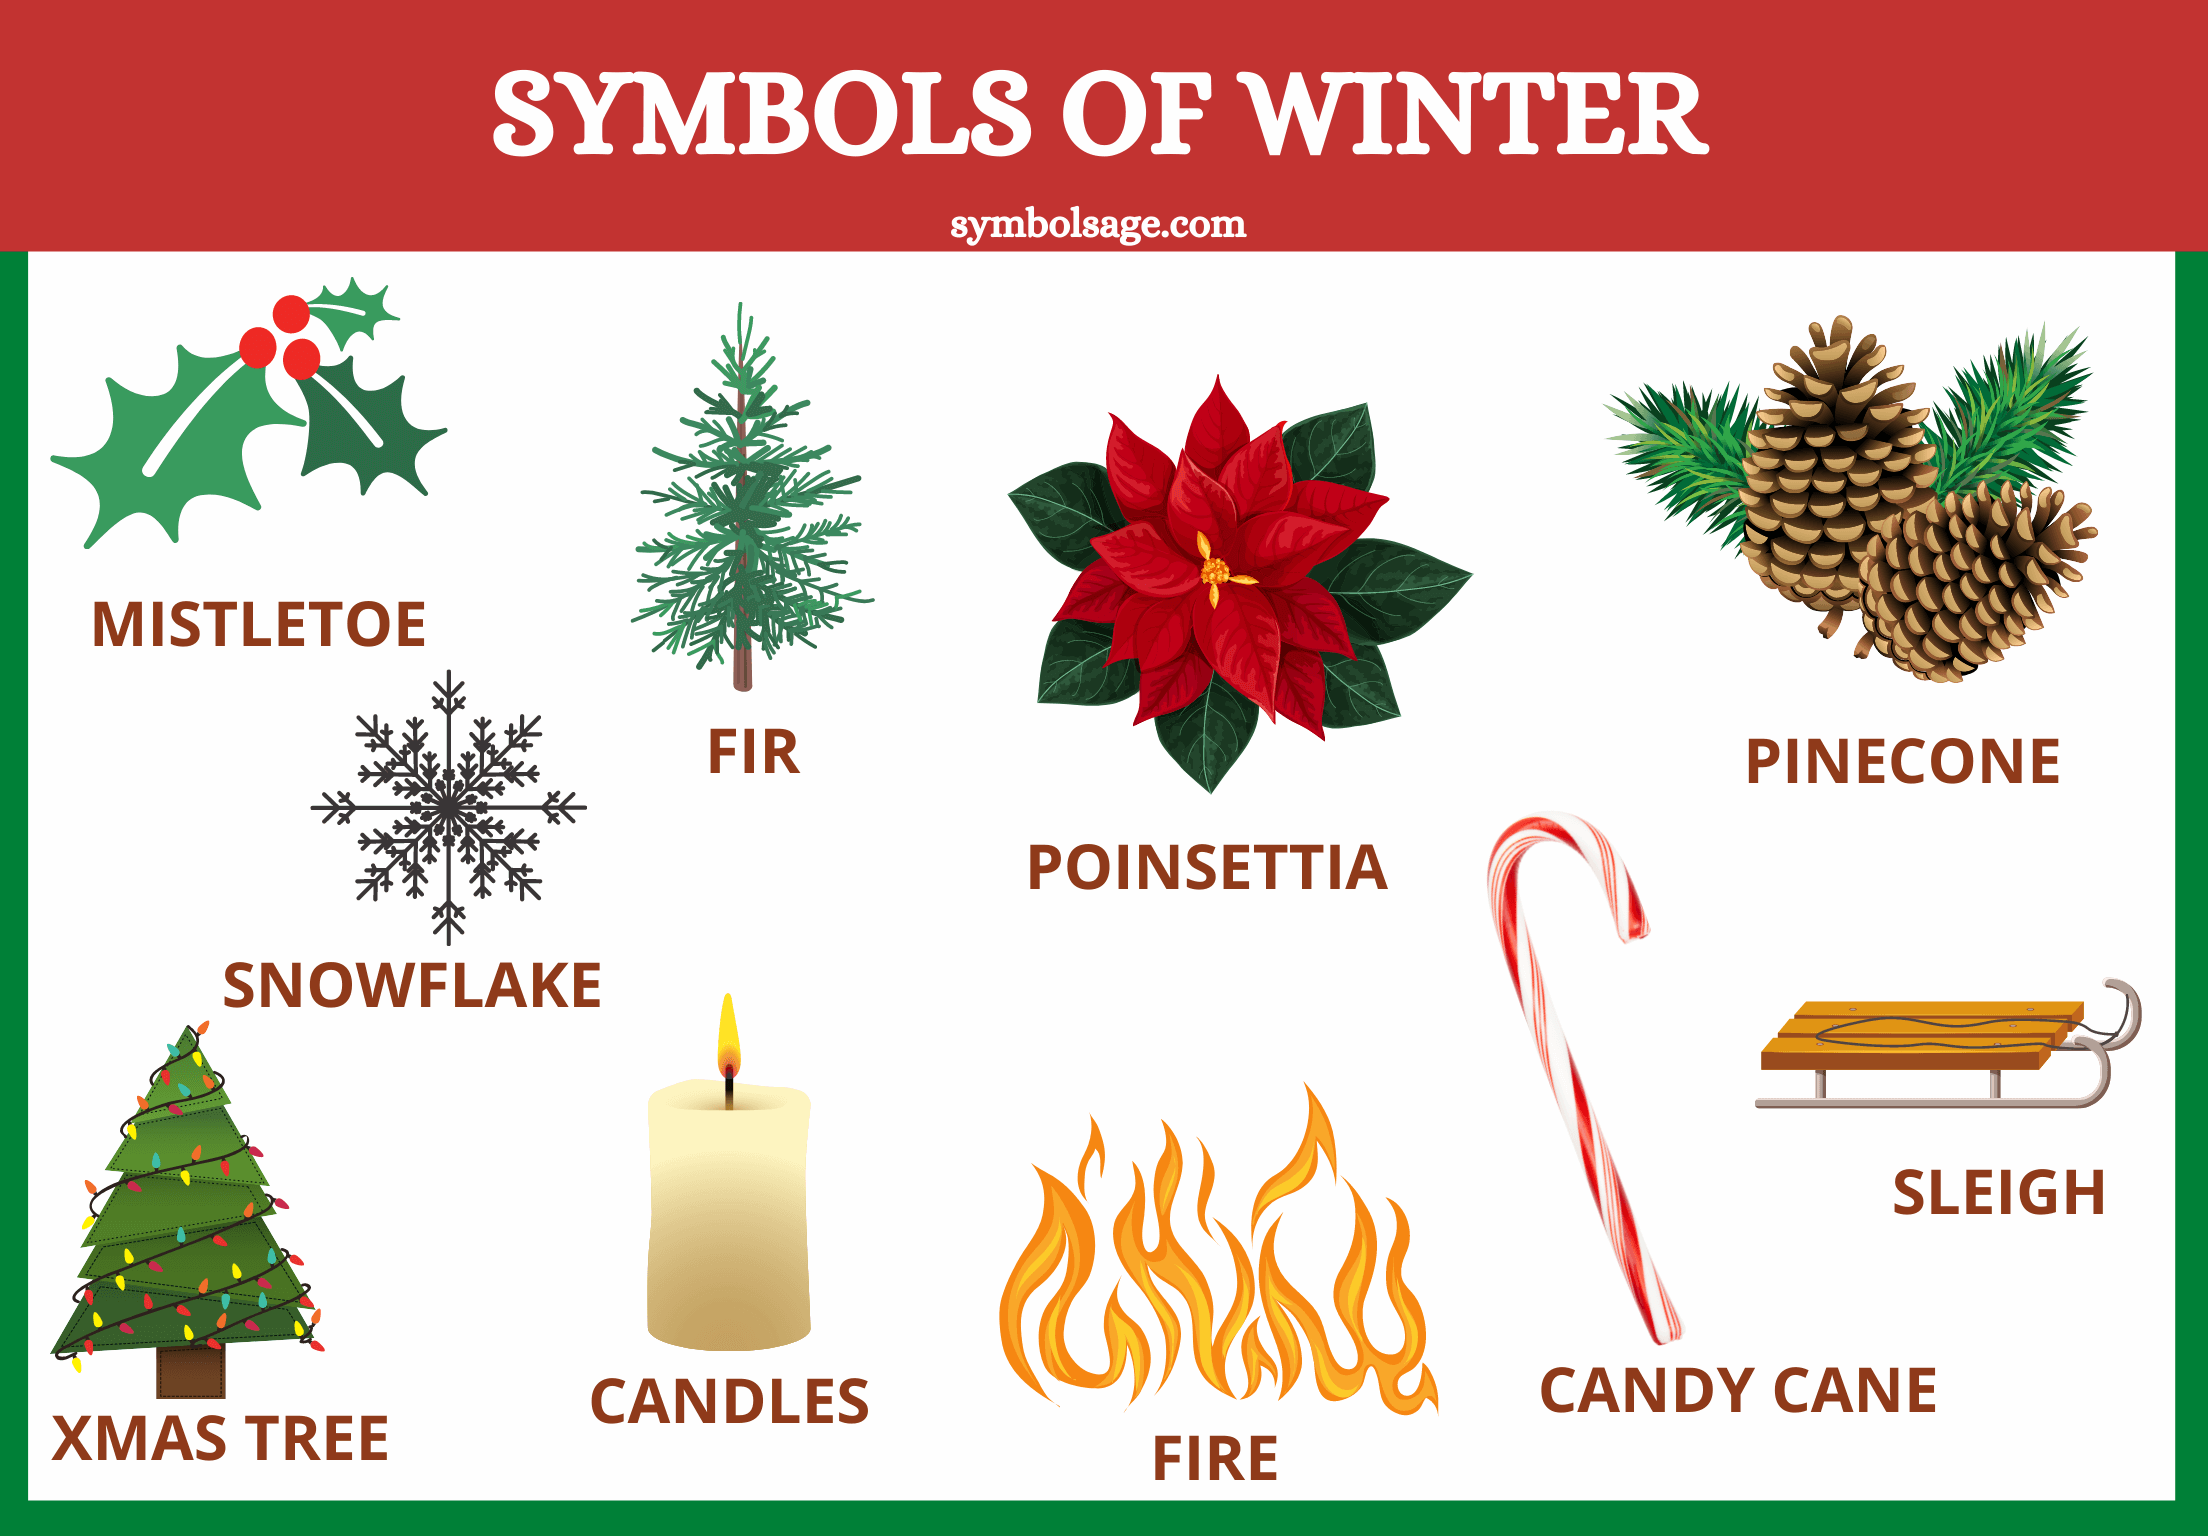 Symbols of winter